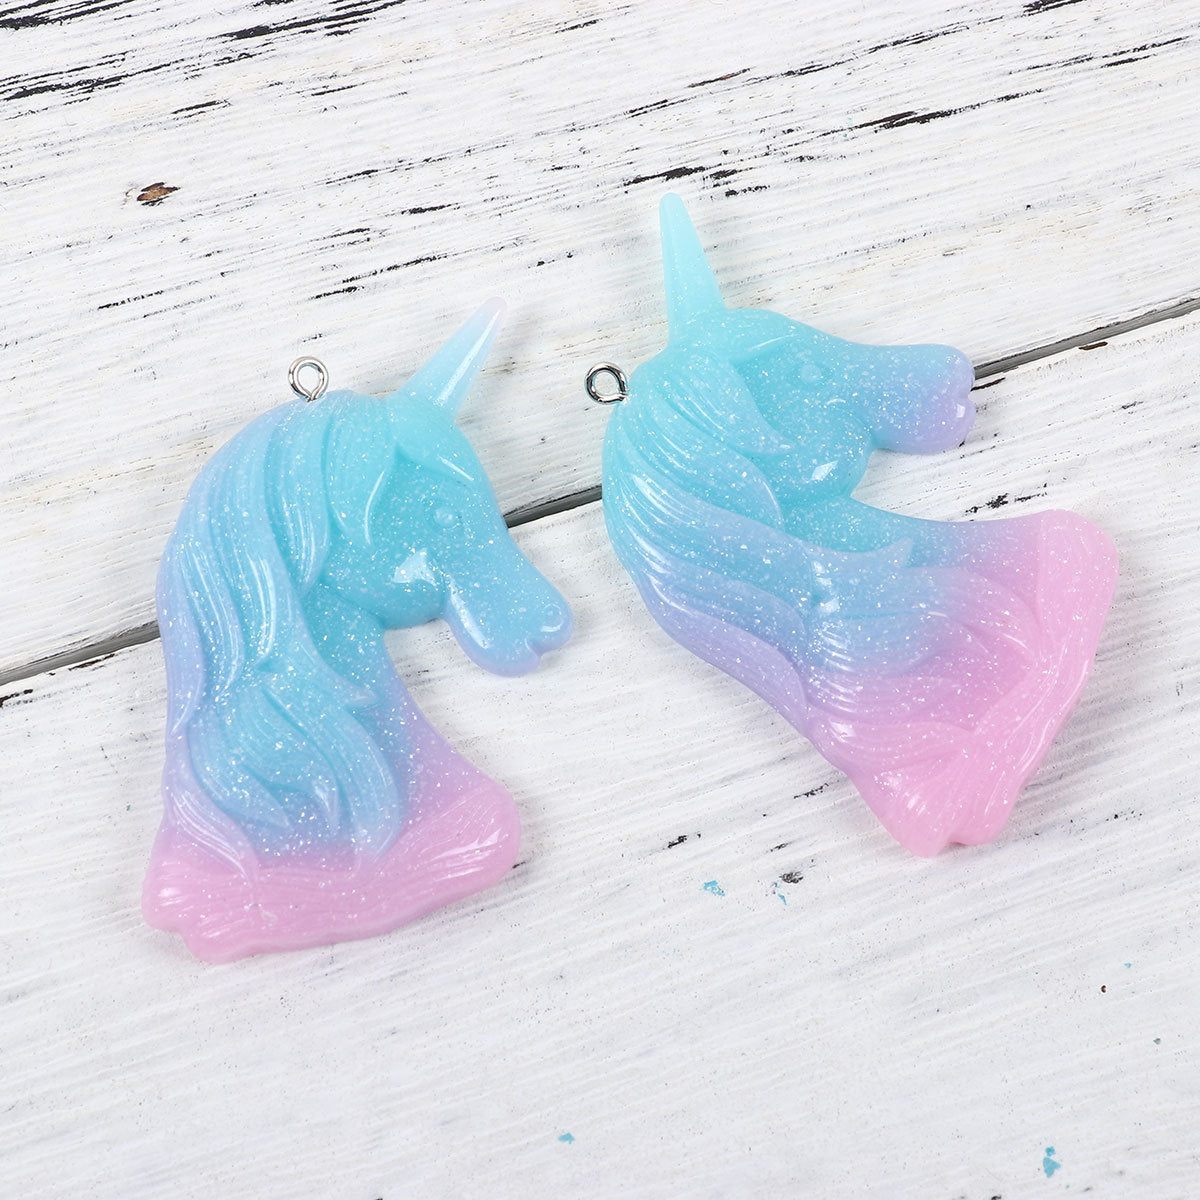 Glitter unicorn charm, resin unicorn pendant, pink purple and aqua shades